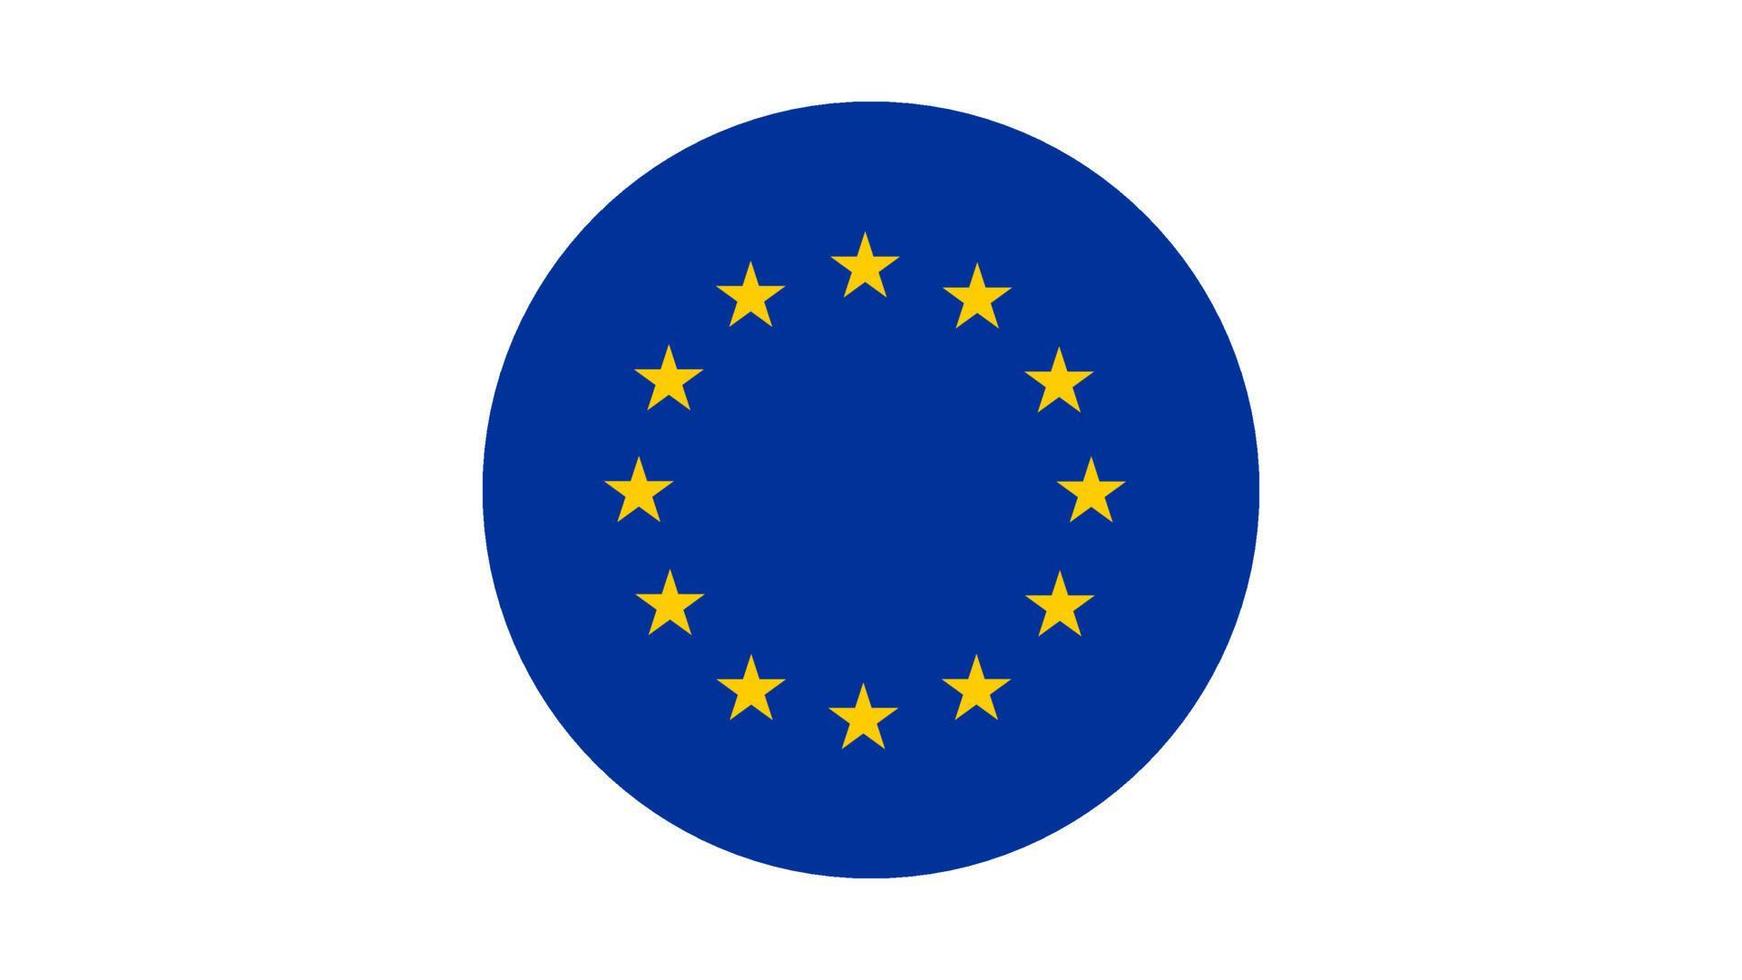 European Union flag circle, Vector image and icon